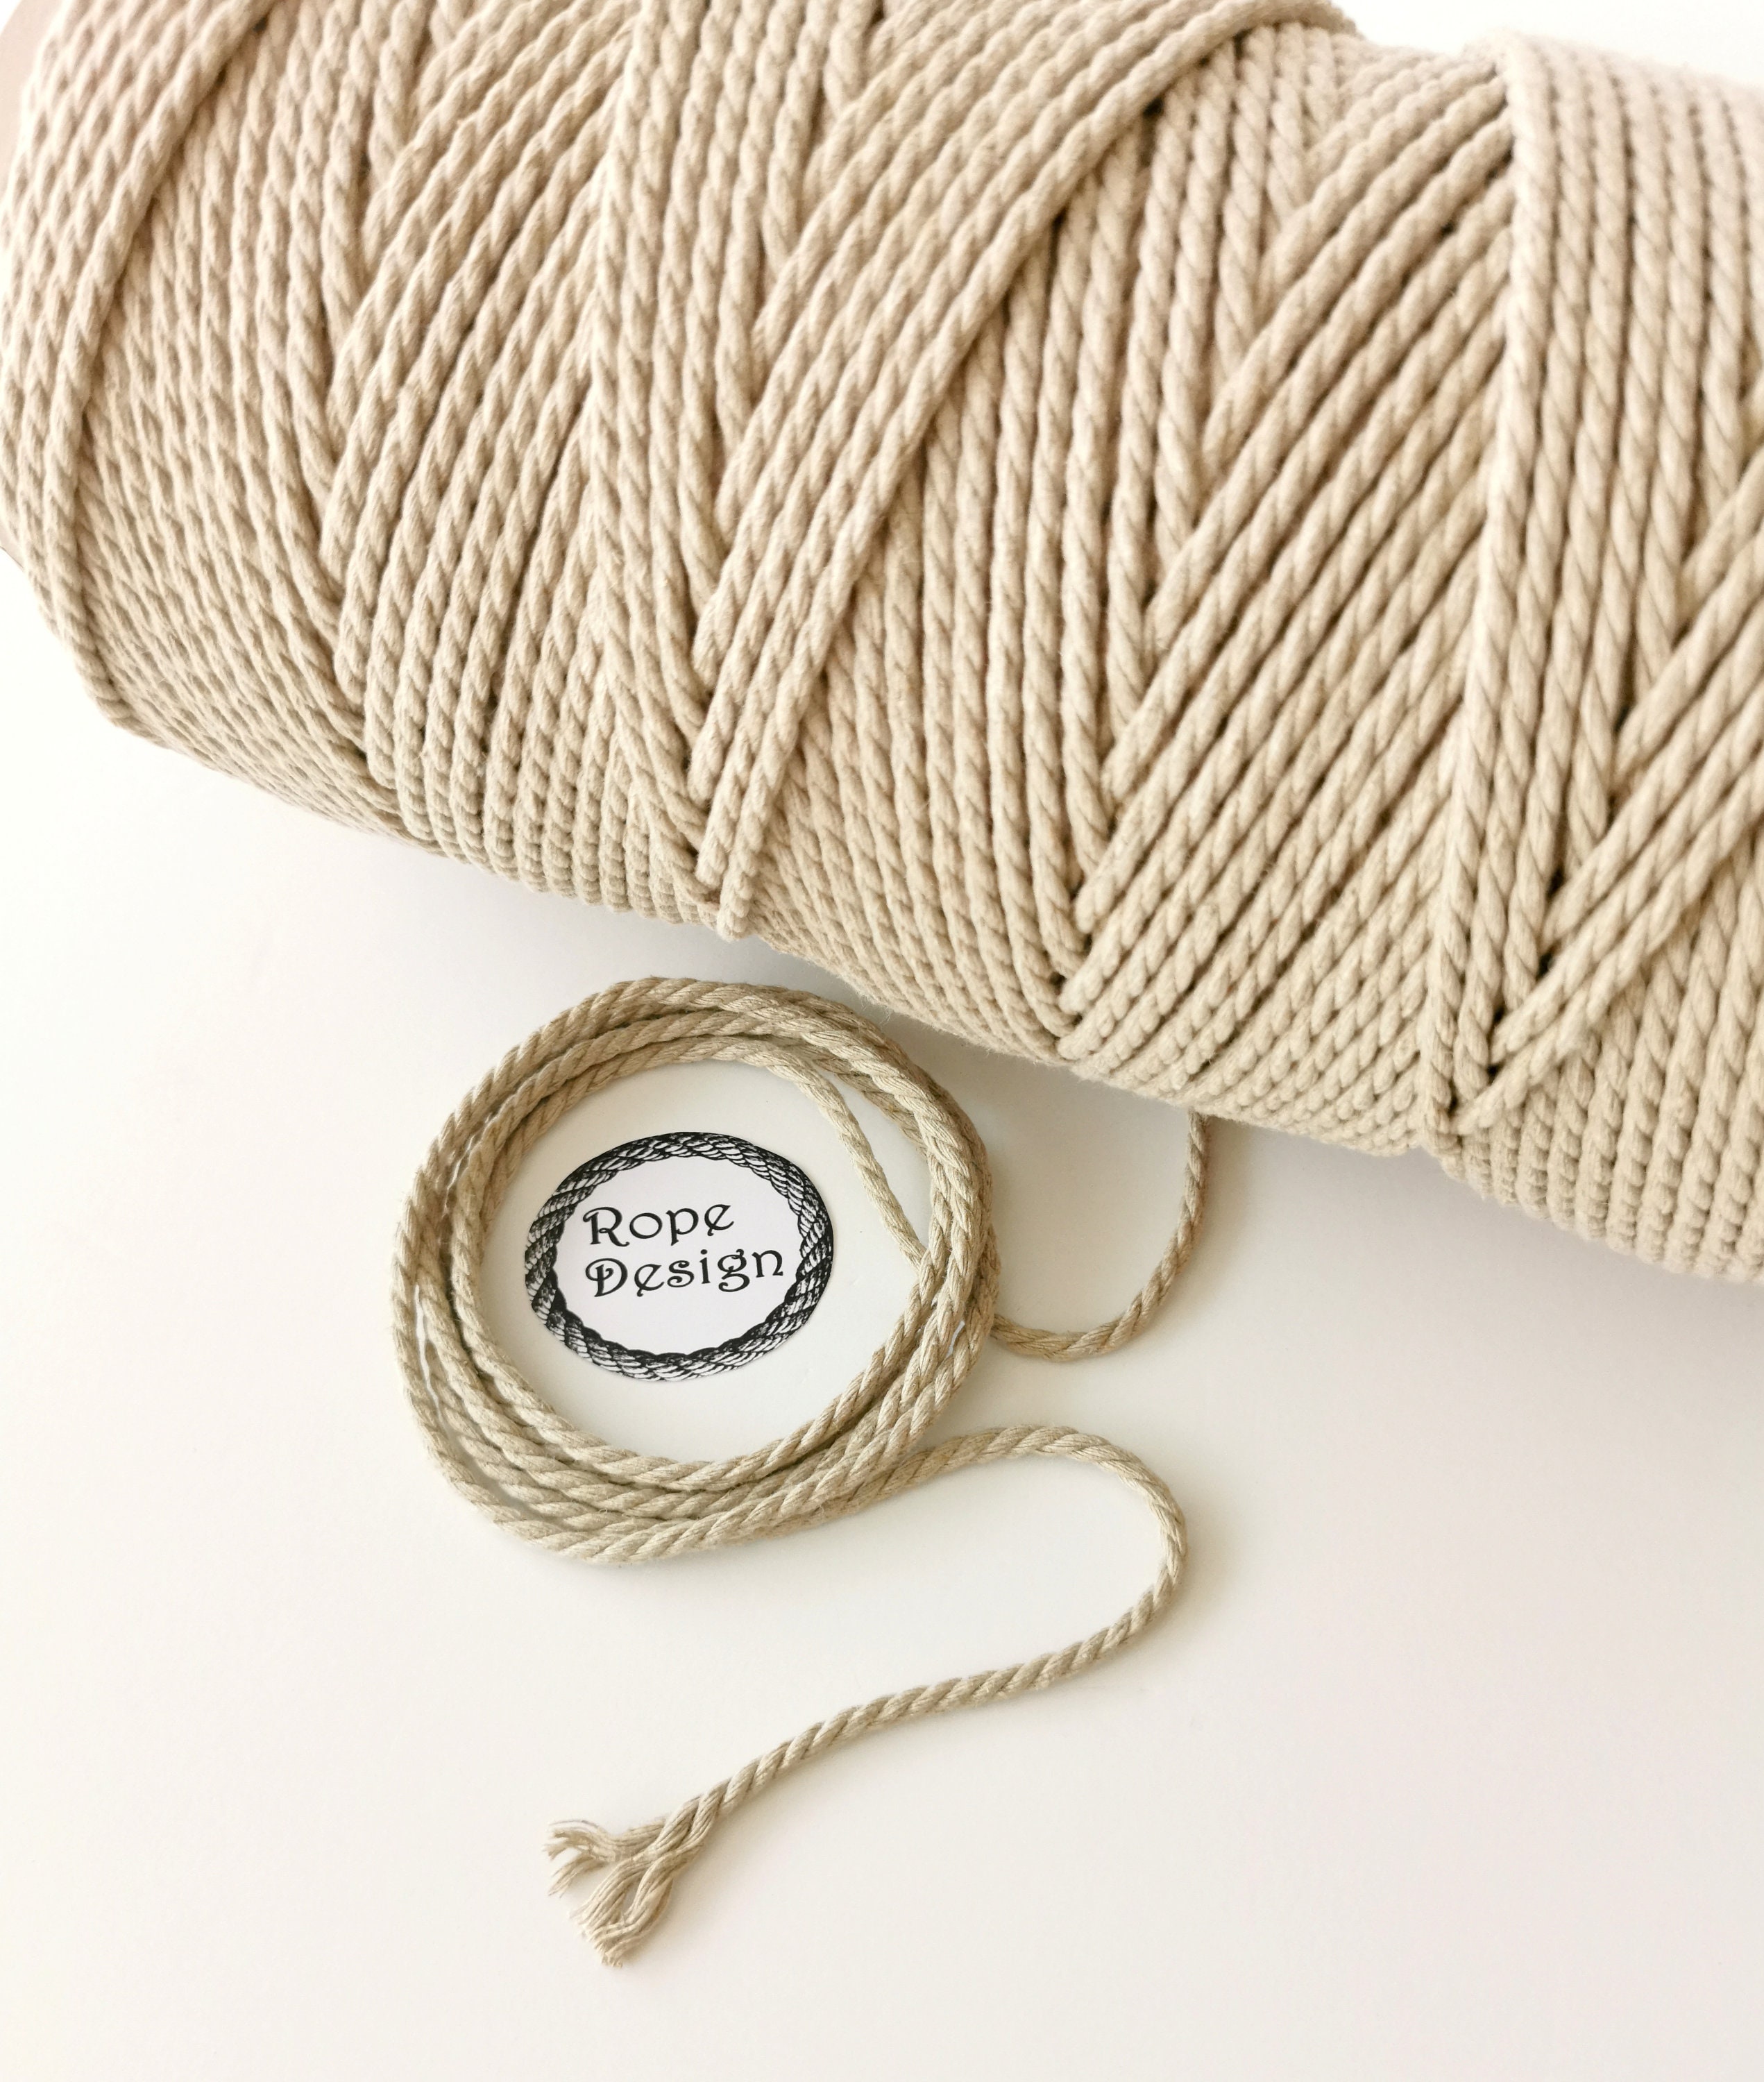 Organic Jute Thin for Craft/ Jute Yarn Nature/ Craft Cord 0.8mm/ Weight  0.44 Lb. Sustainability Cord/ Hobby Yarn/ Eco Twine/ Crochet Yarn 